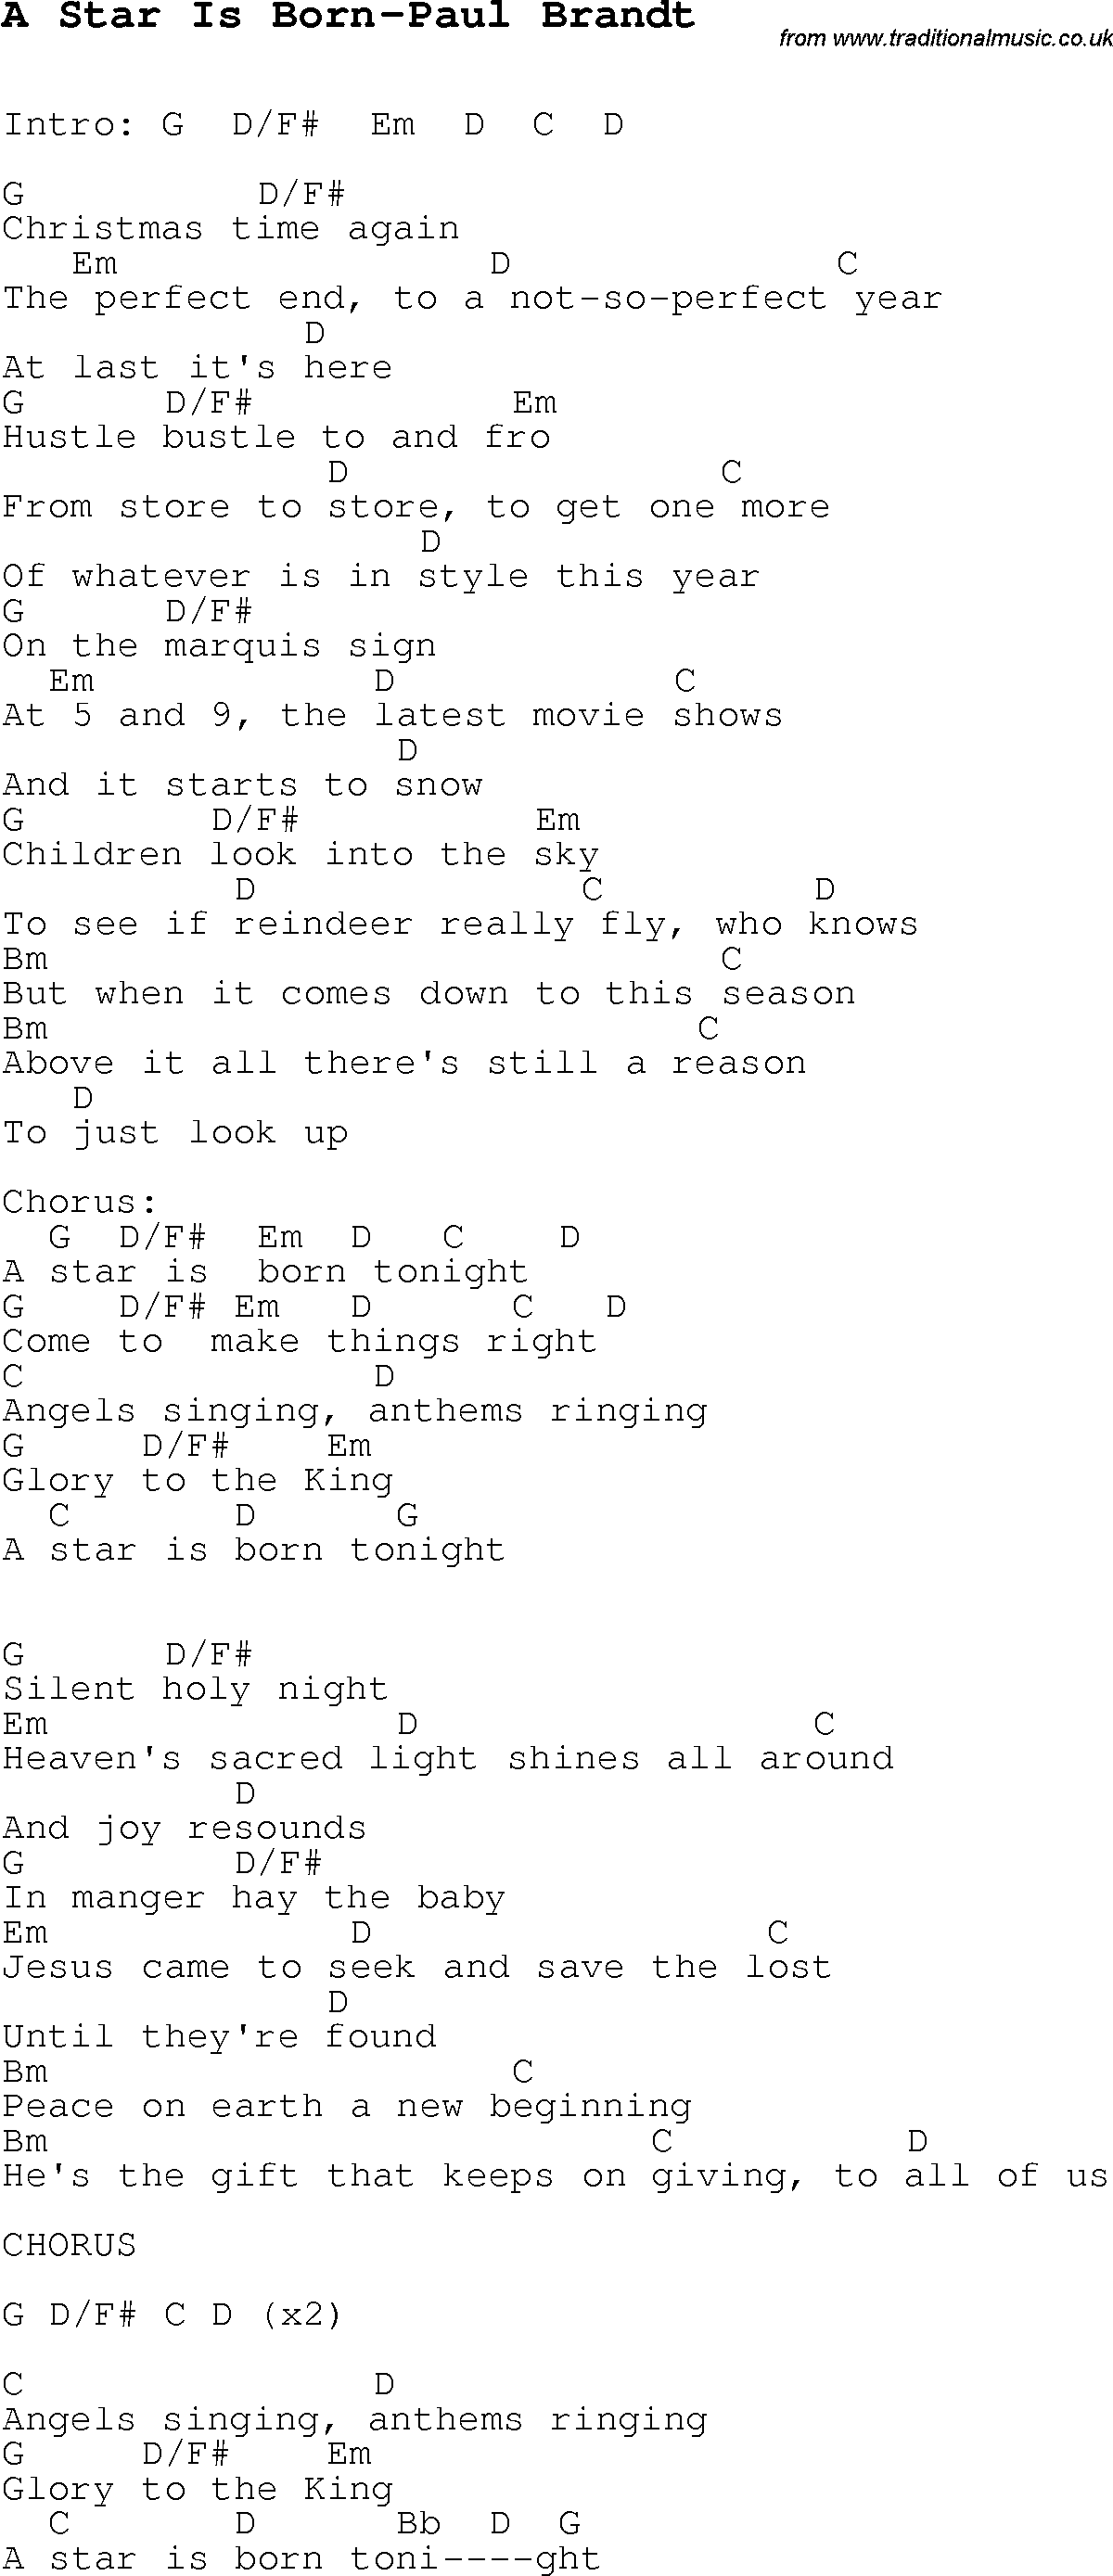 Christmas Carol/Song lyrics with chords for A Star Is Born-Paul Brandt